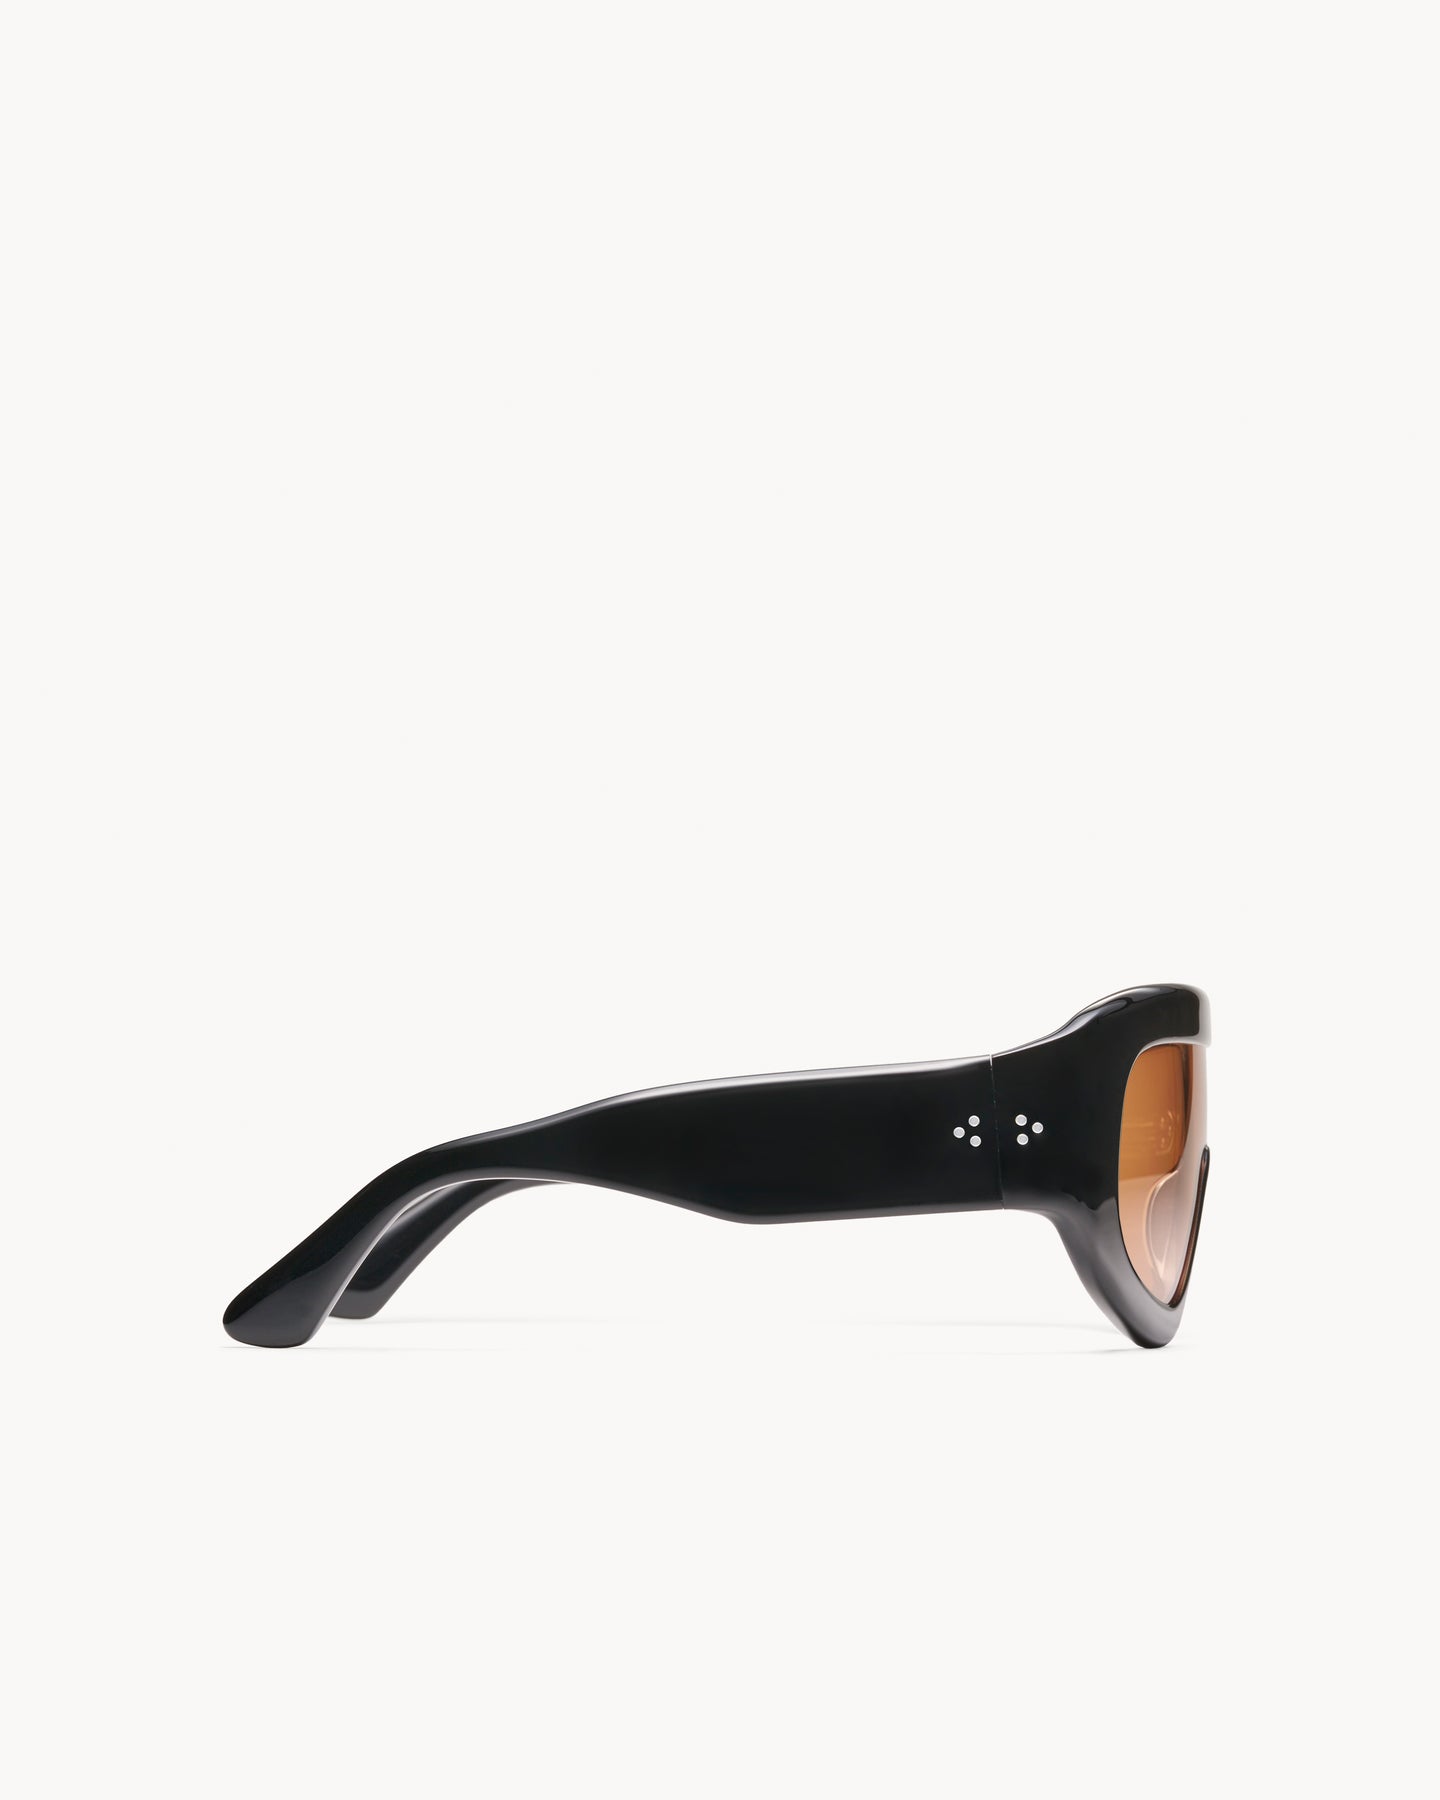 Port Tanger Saraa Sunglasses in Black Acetate and Amber Lenses 4